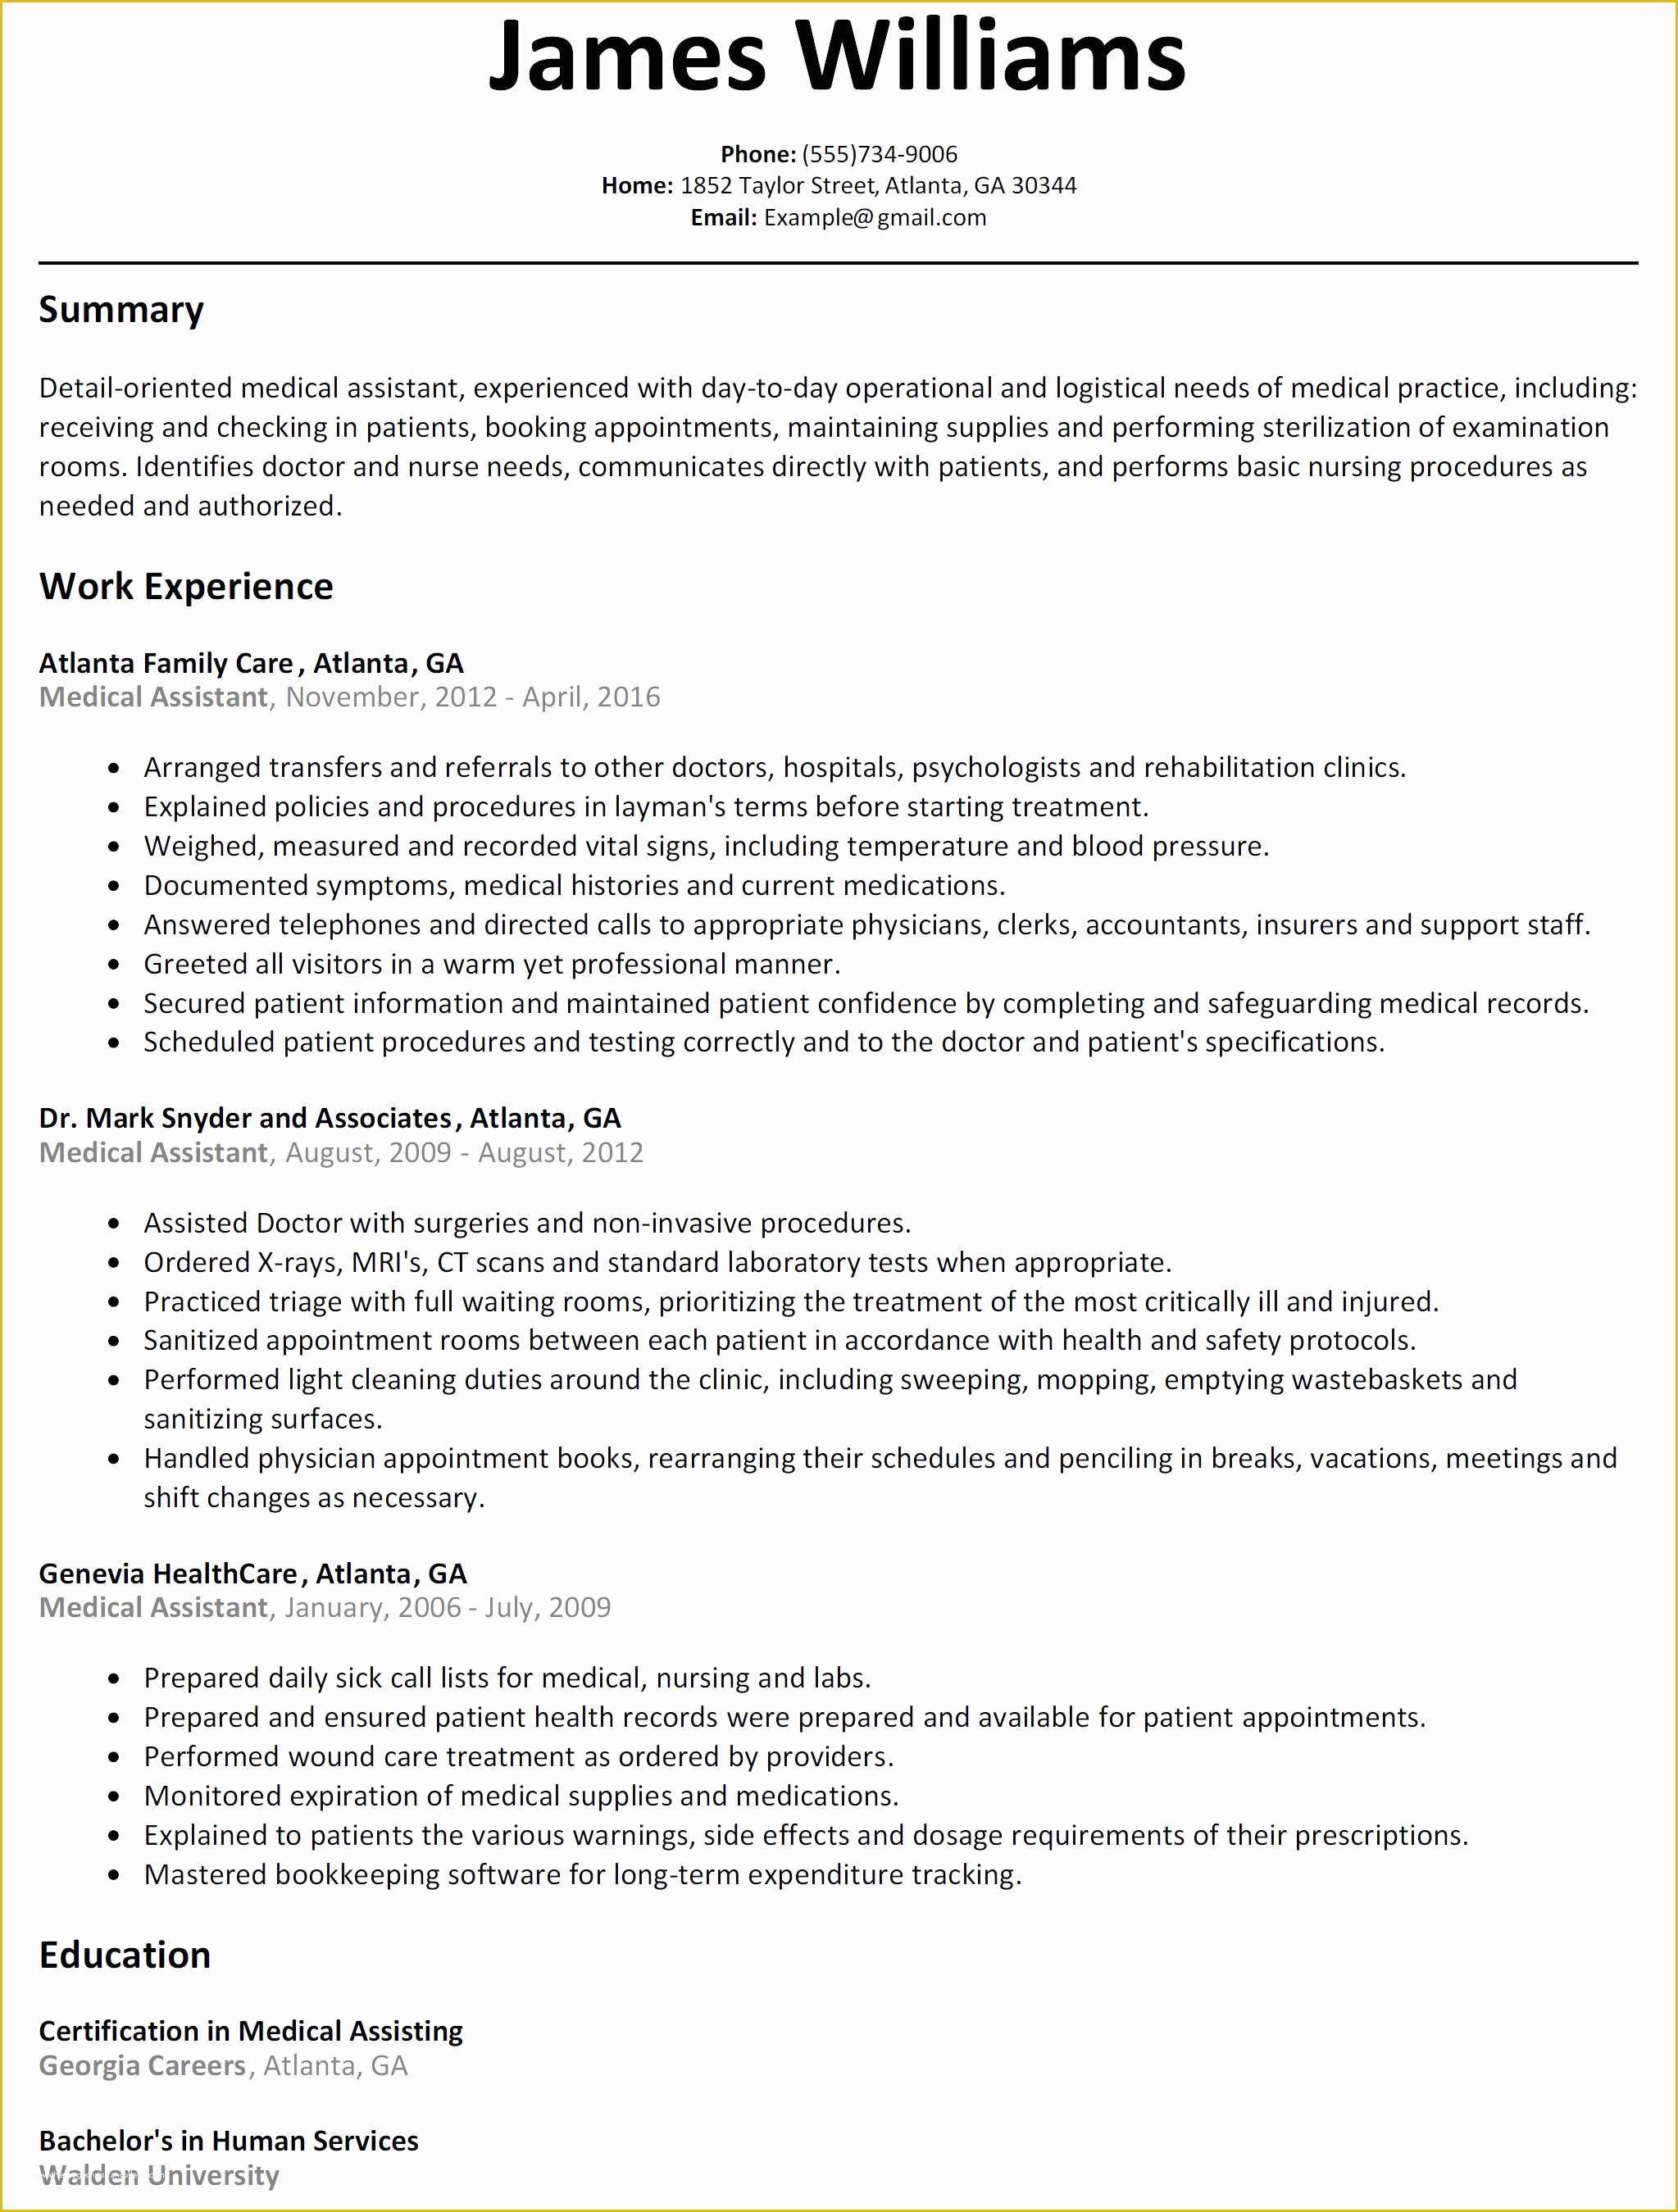 Free Resume Templates Microsoft Word 2007 Of Microsoft Word 2007 Resume Templates Free Creative